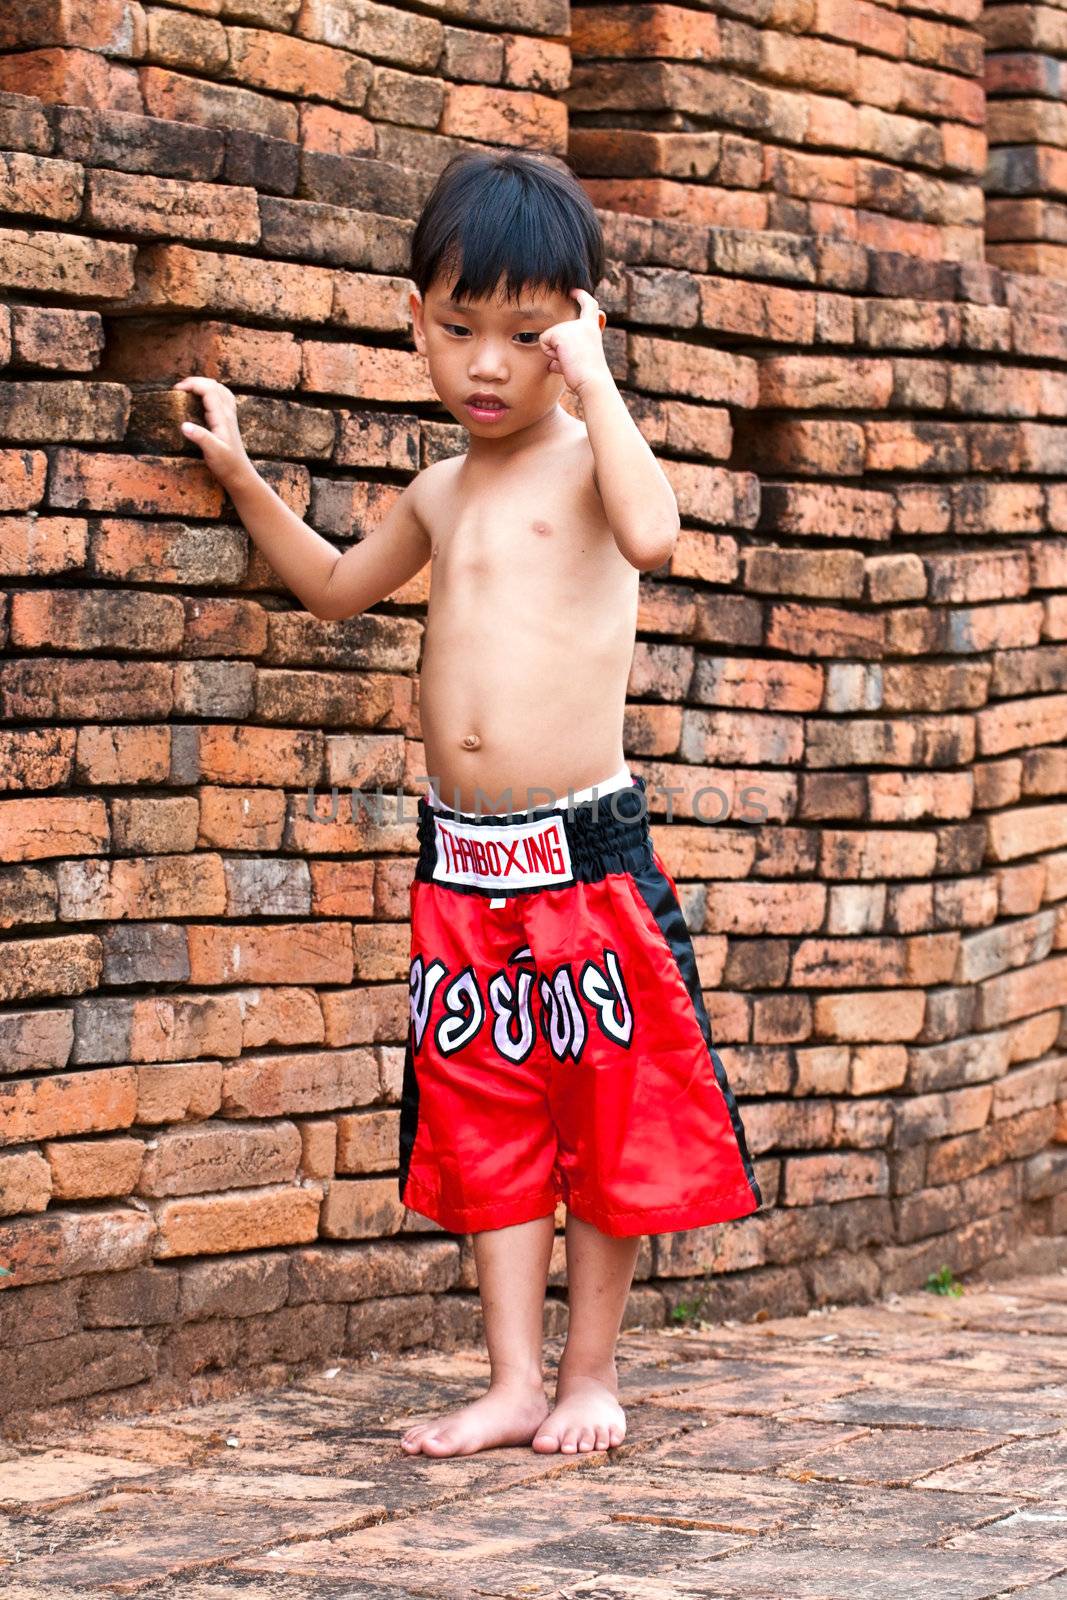 thai boxing or muay thai on location history by Yuri2012